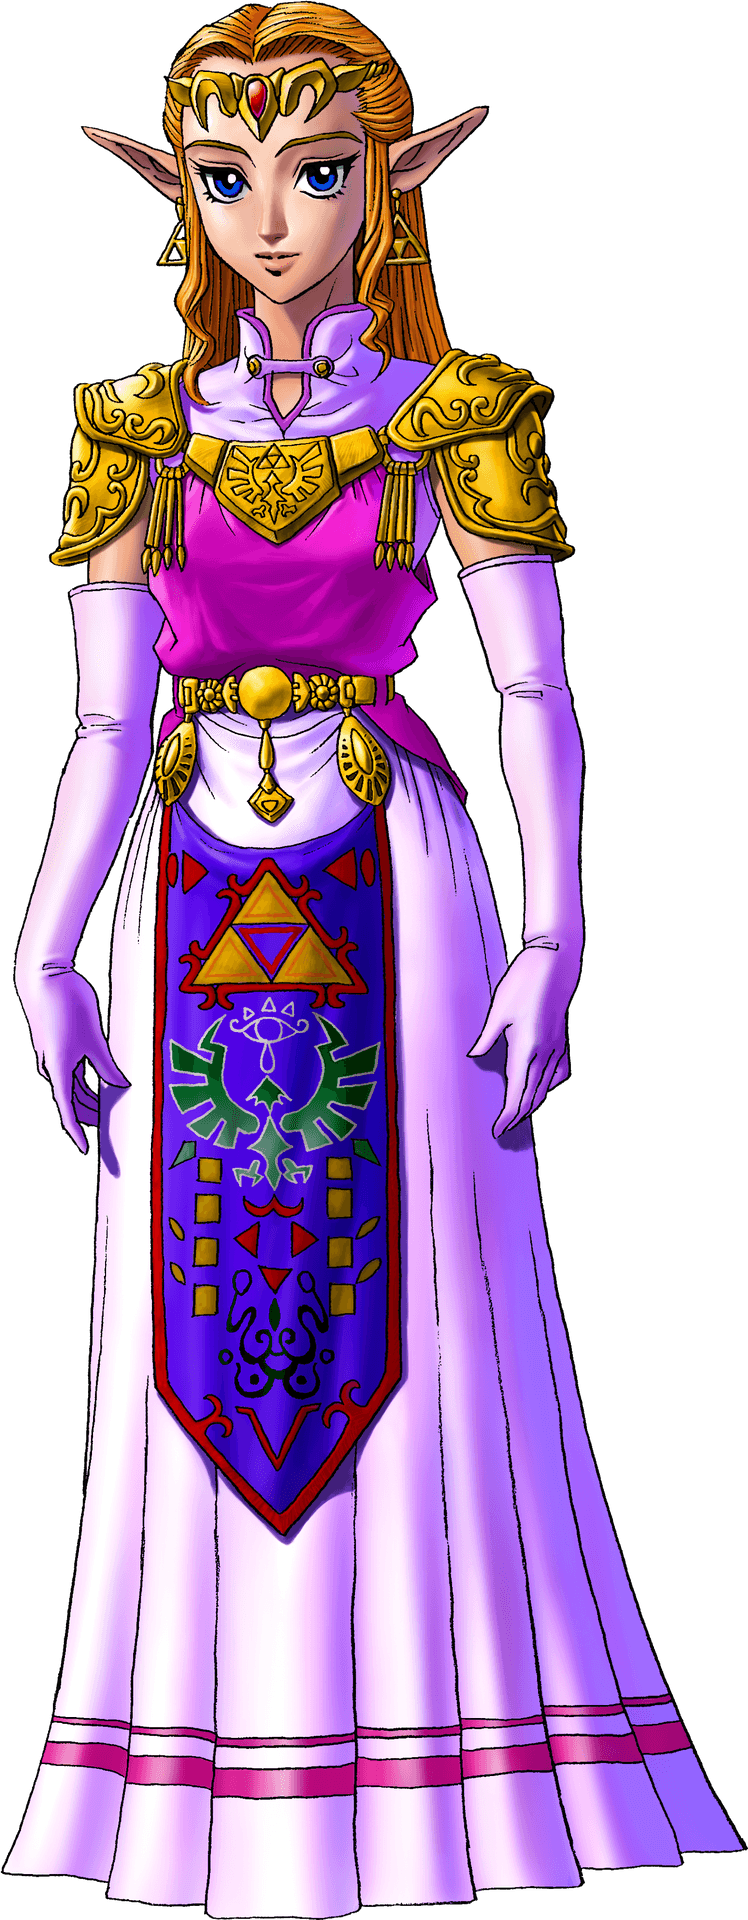 Princess Zelda Legendof Zelda Artwork PNG